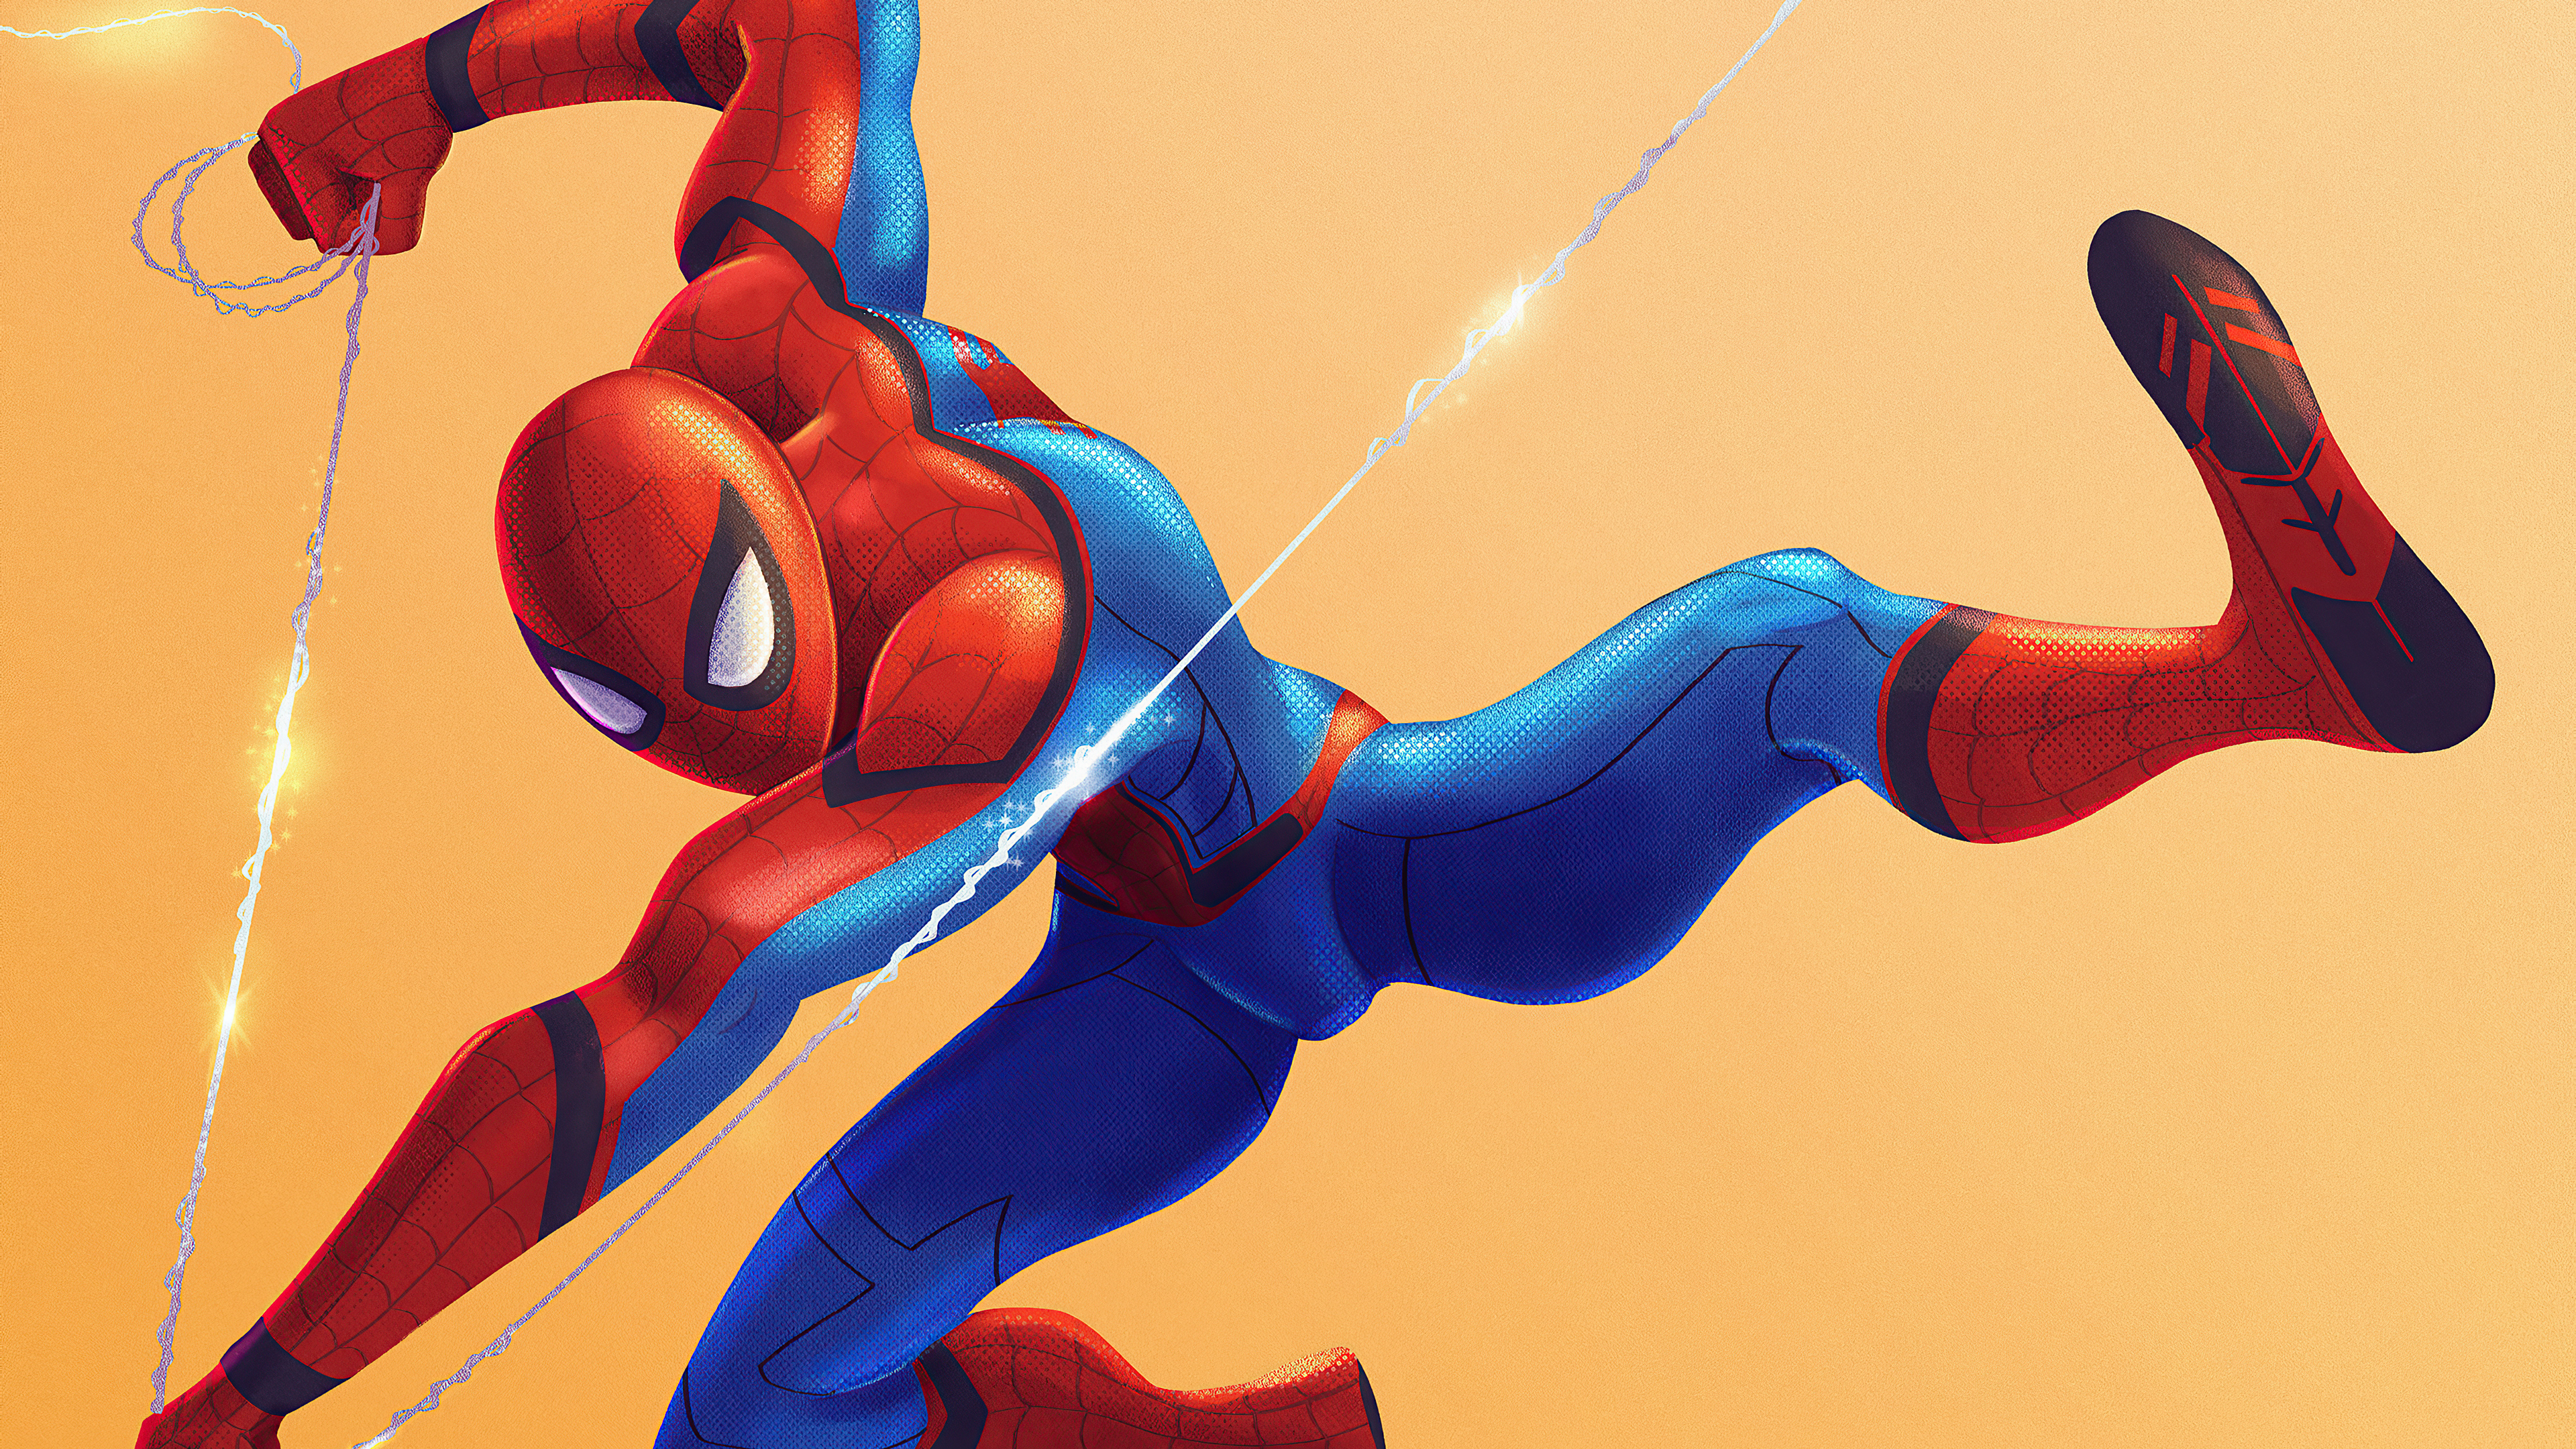 Spider Man 2020 Artwork New Wallpaper,HD Superheroes Wallpapers,4k ...